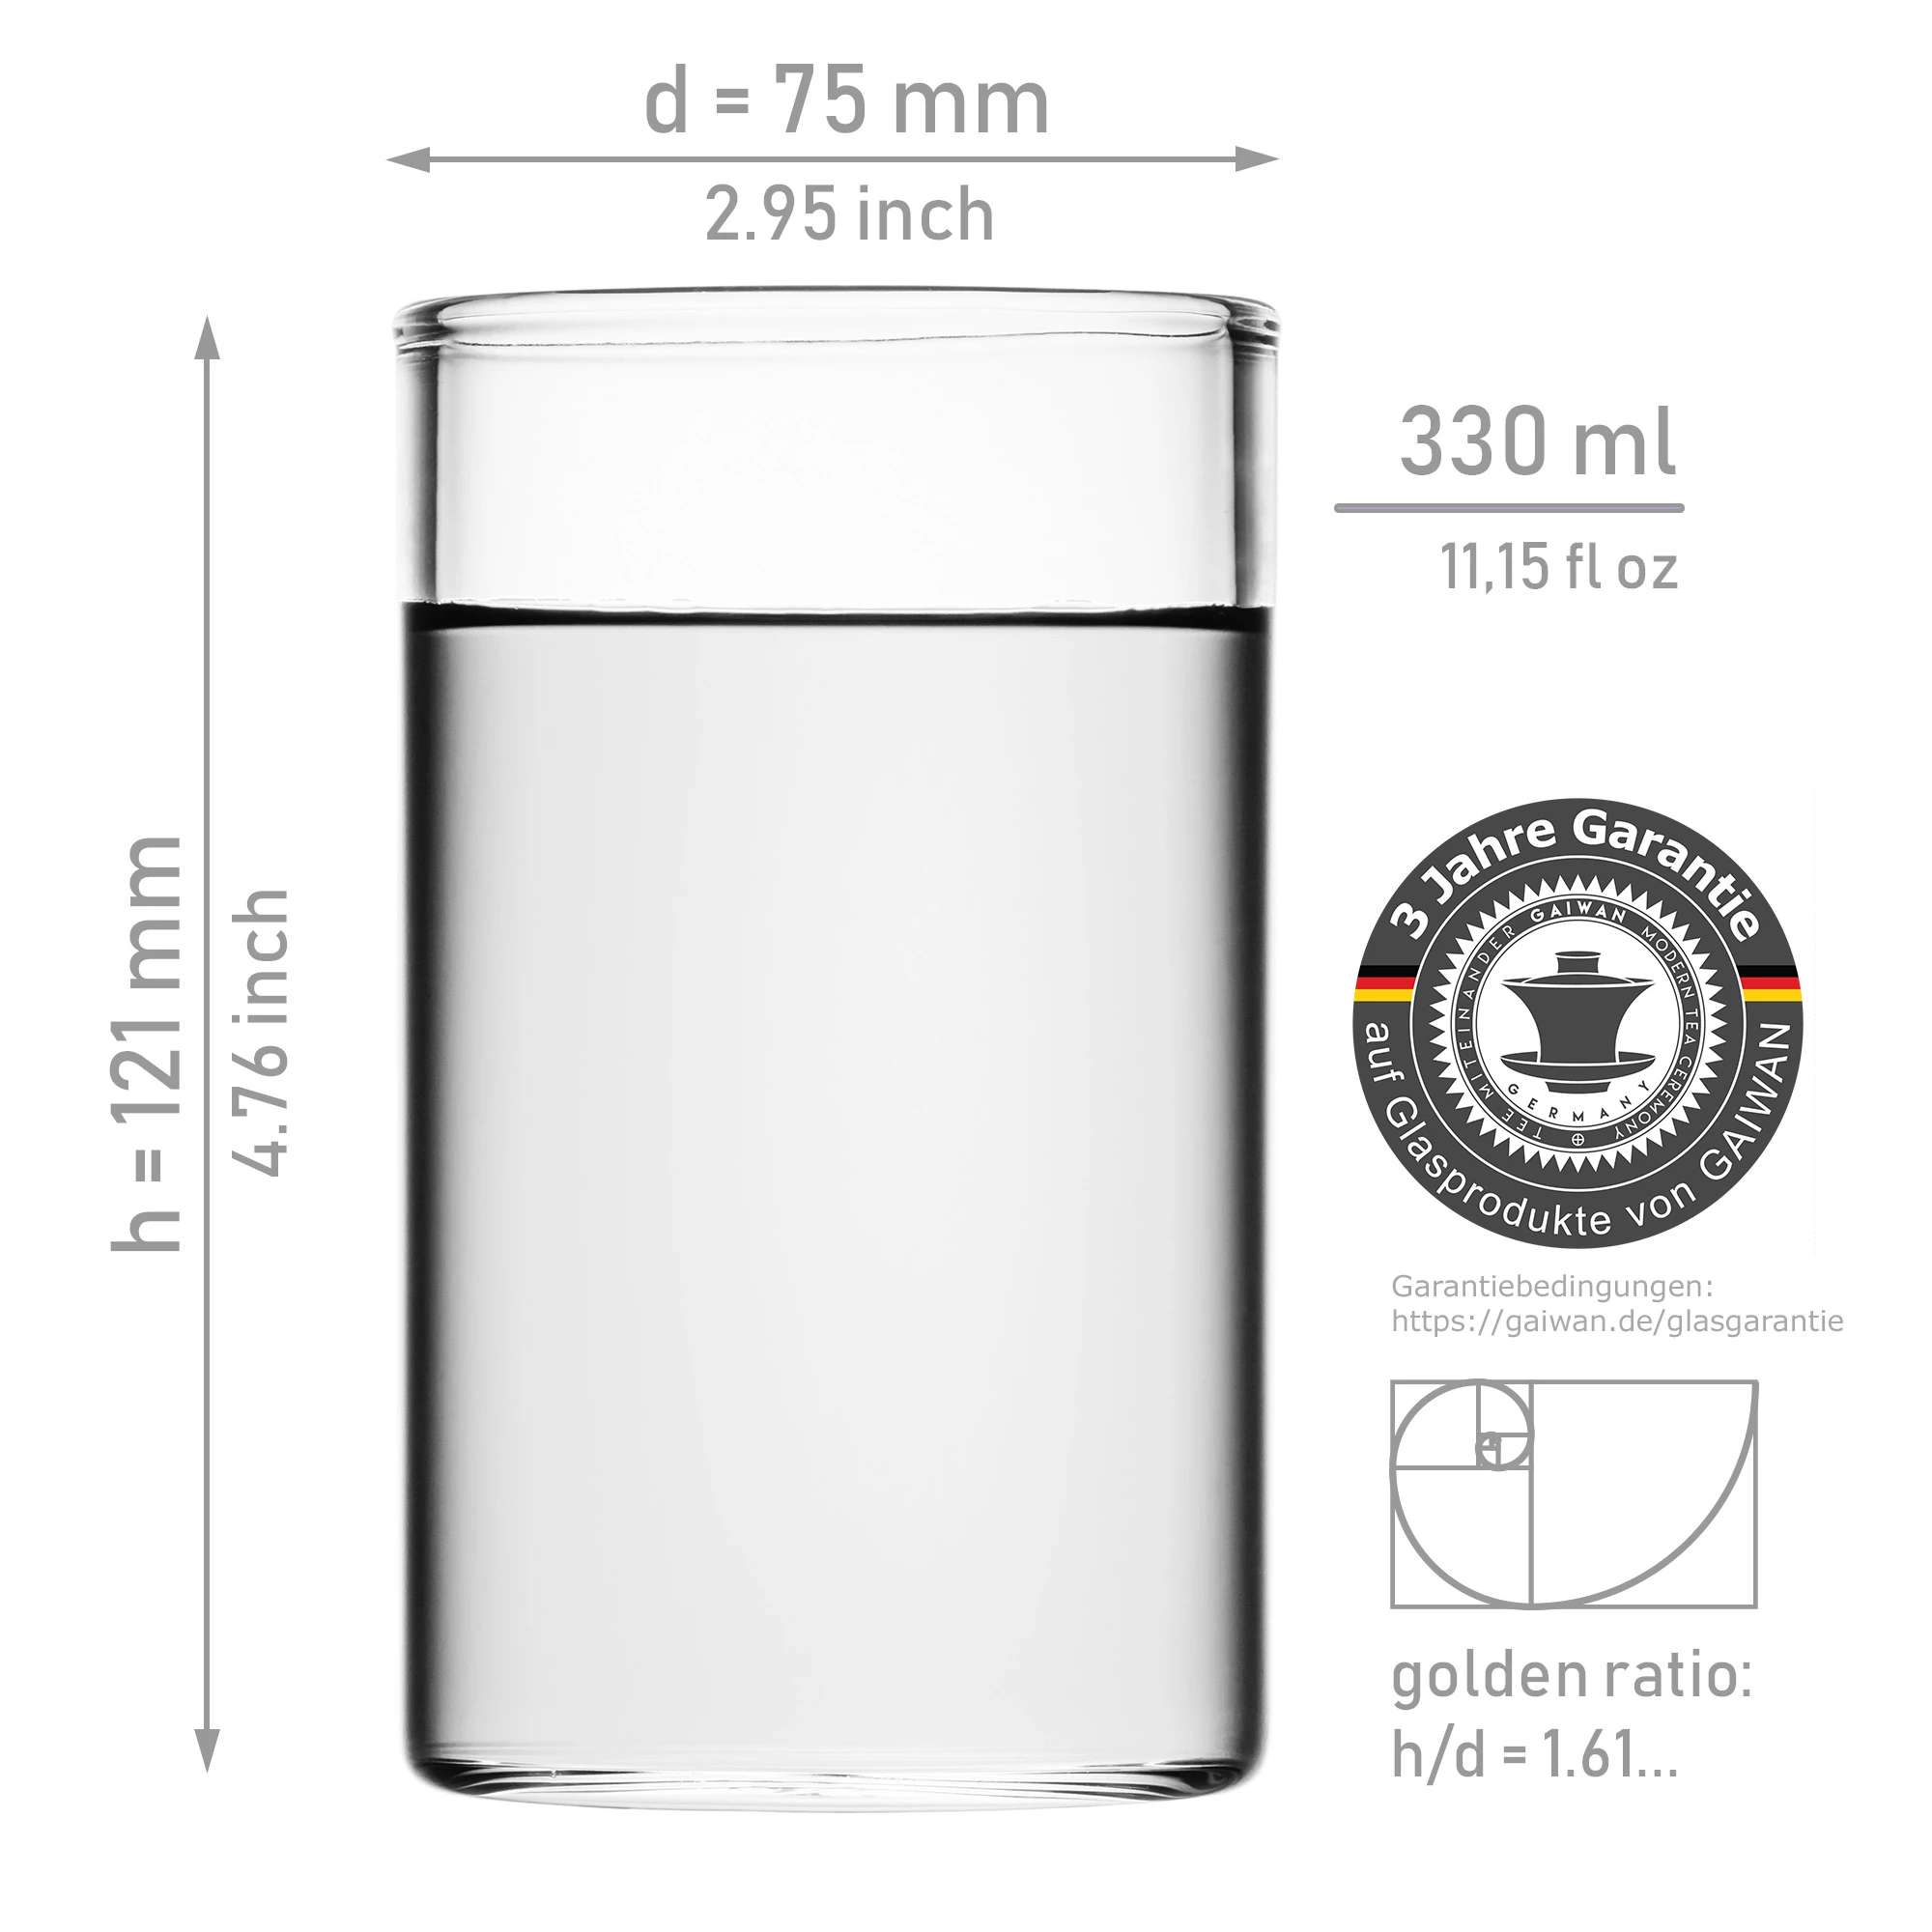 ICEGOLD330 x4: Drinking Glasses, Set Of 4